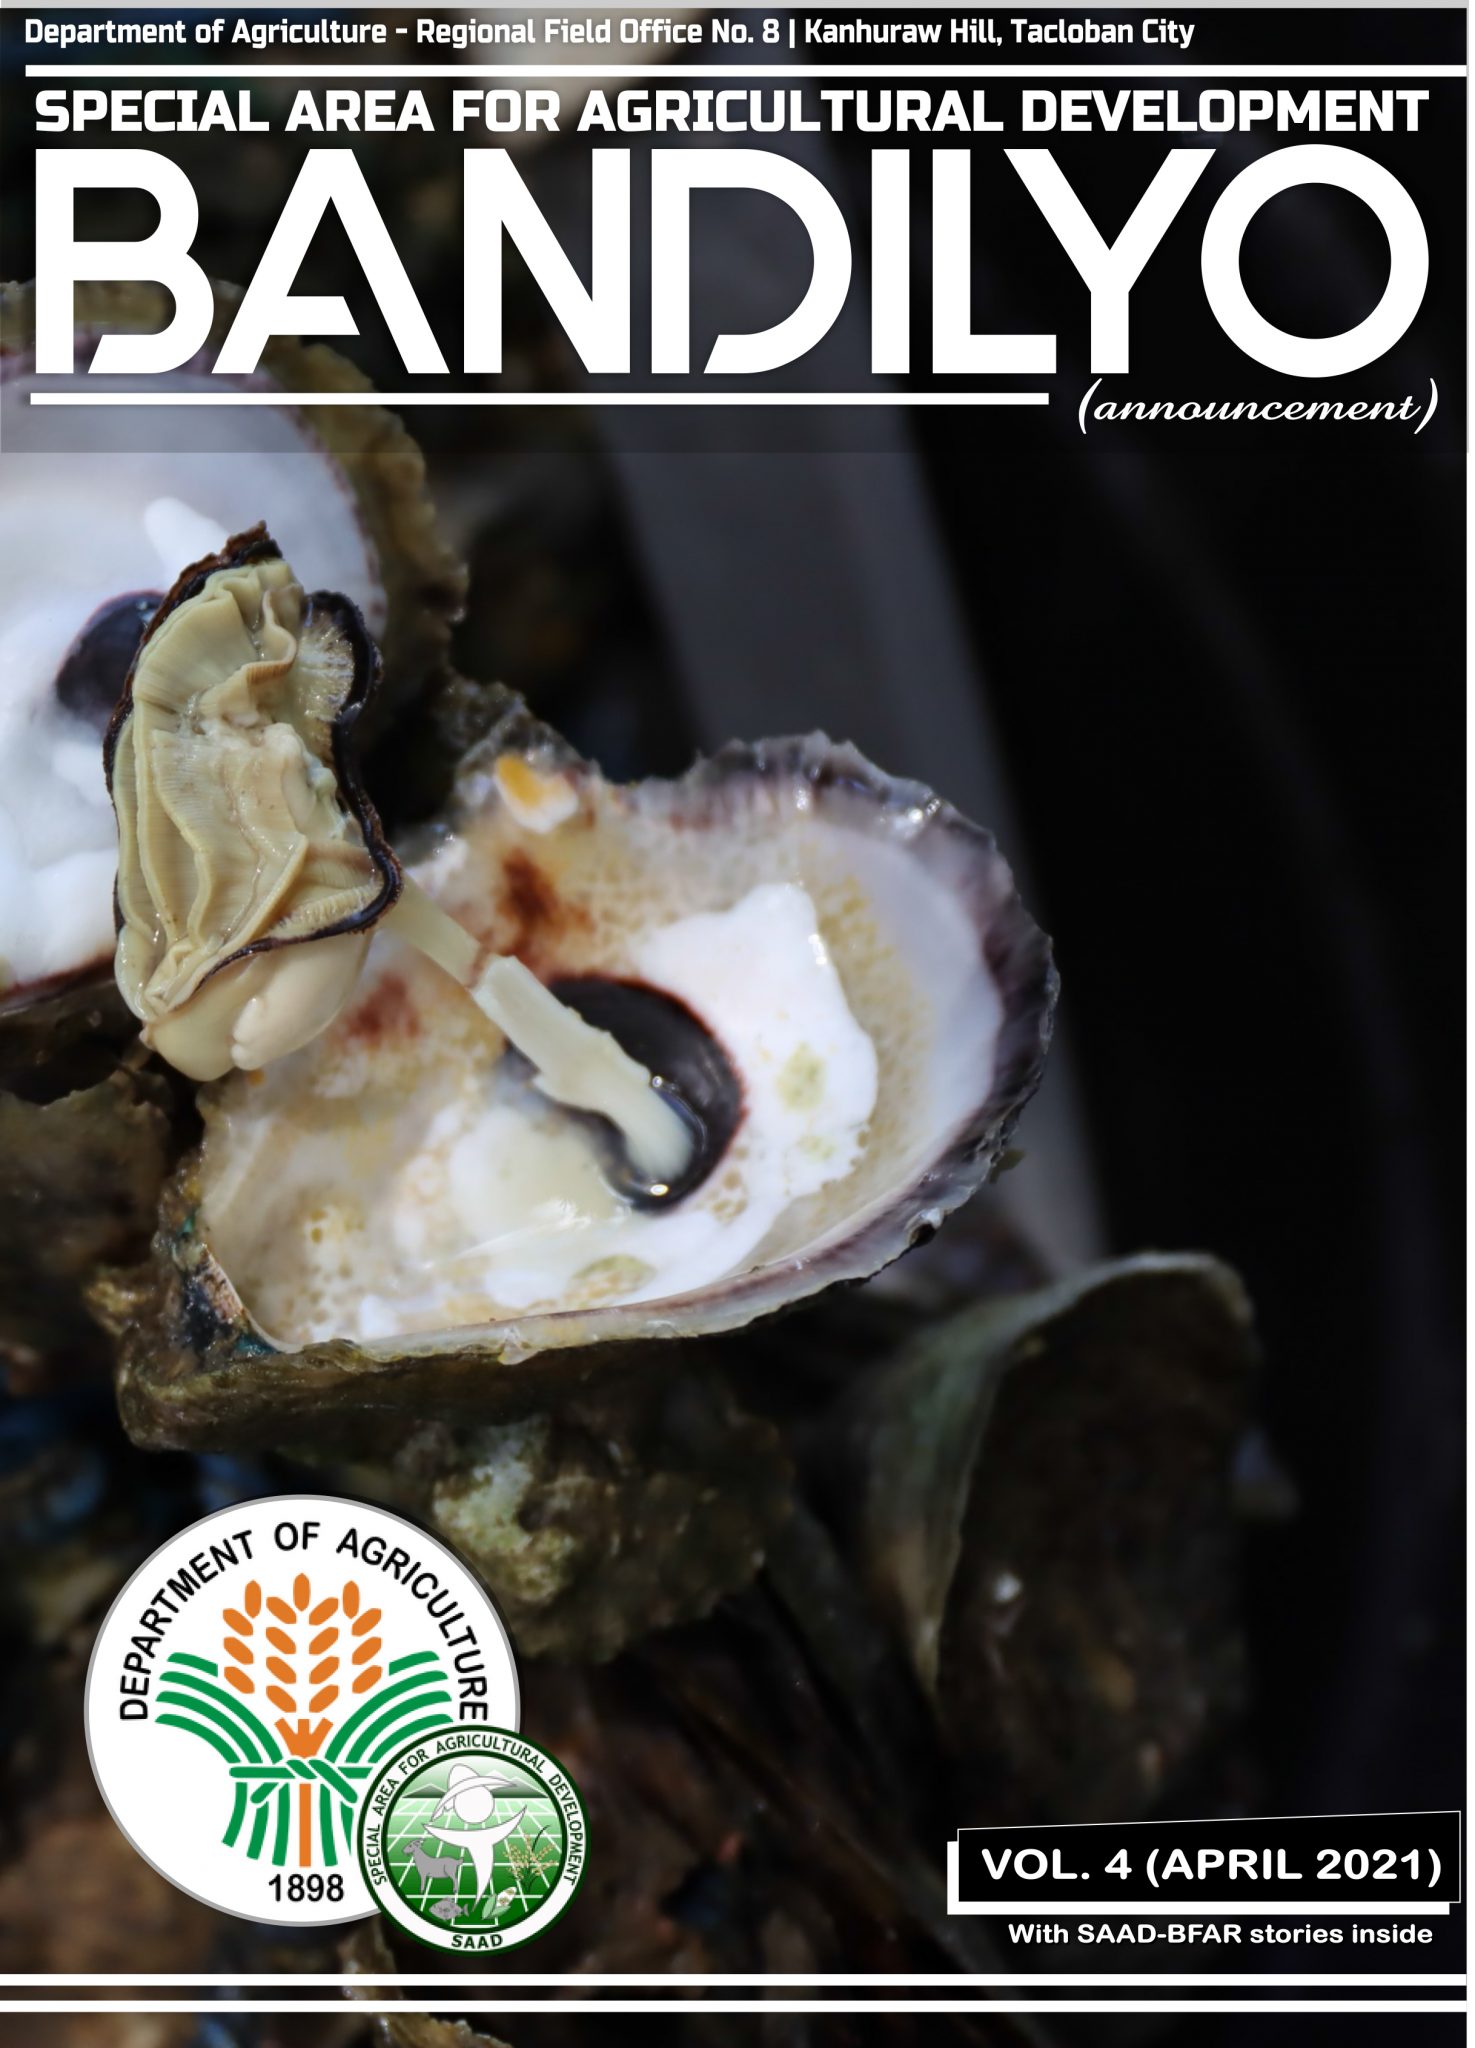 Bandilyo Issue No. 4 Series 2021